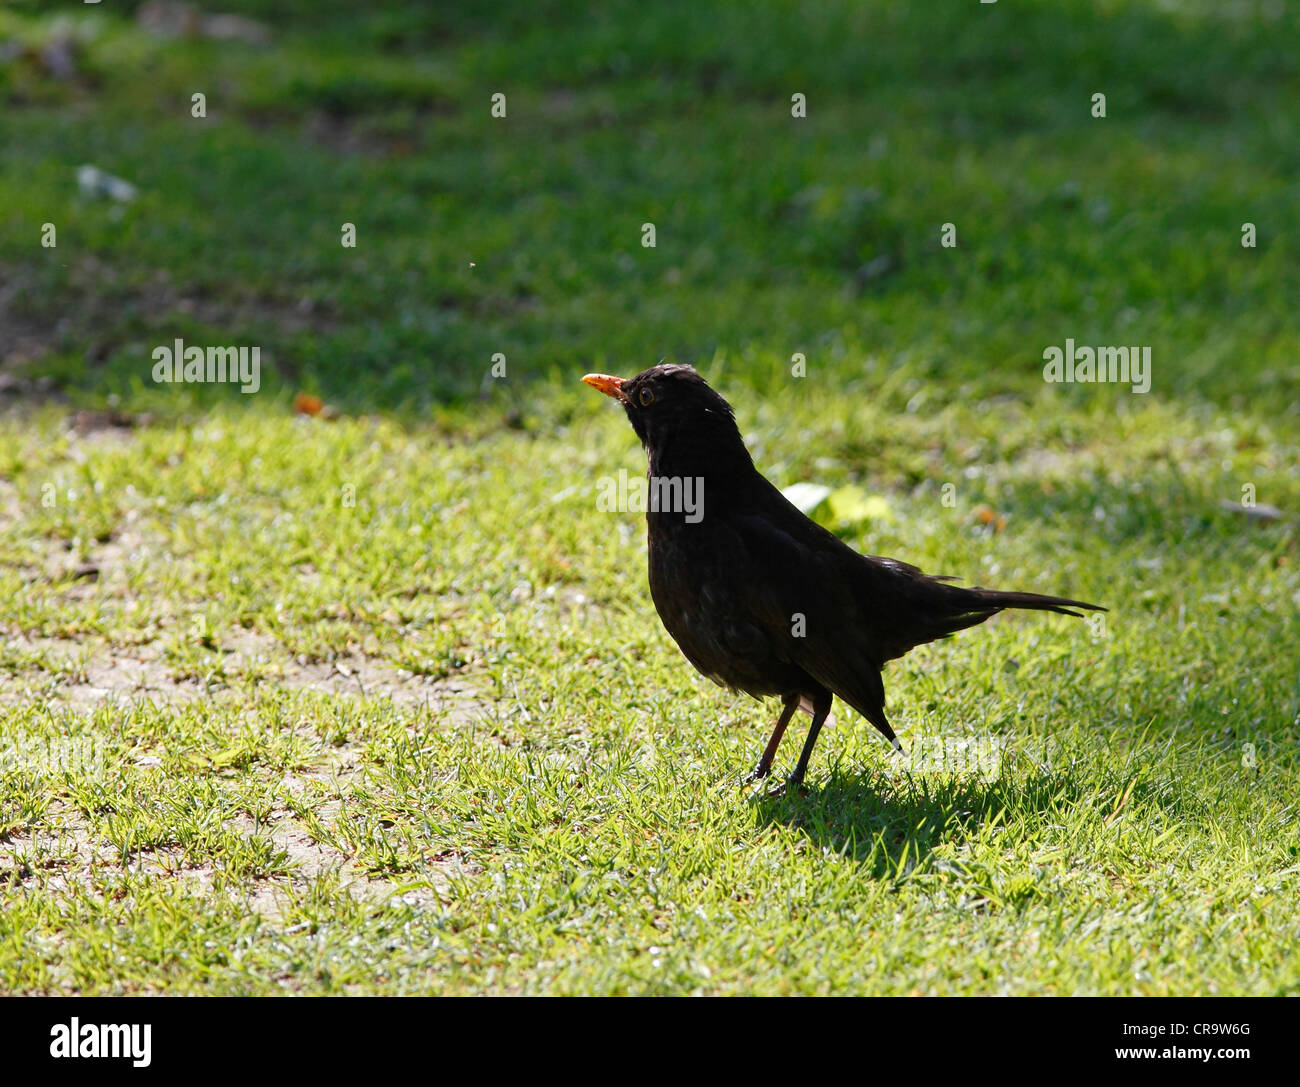 Blackbird on grass Stock Photo